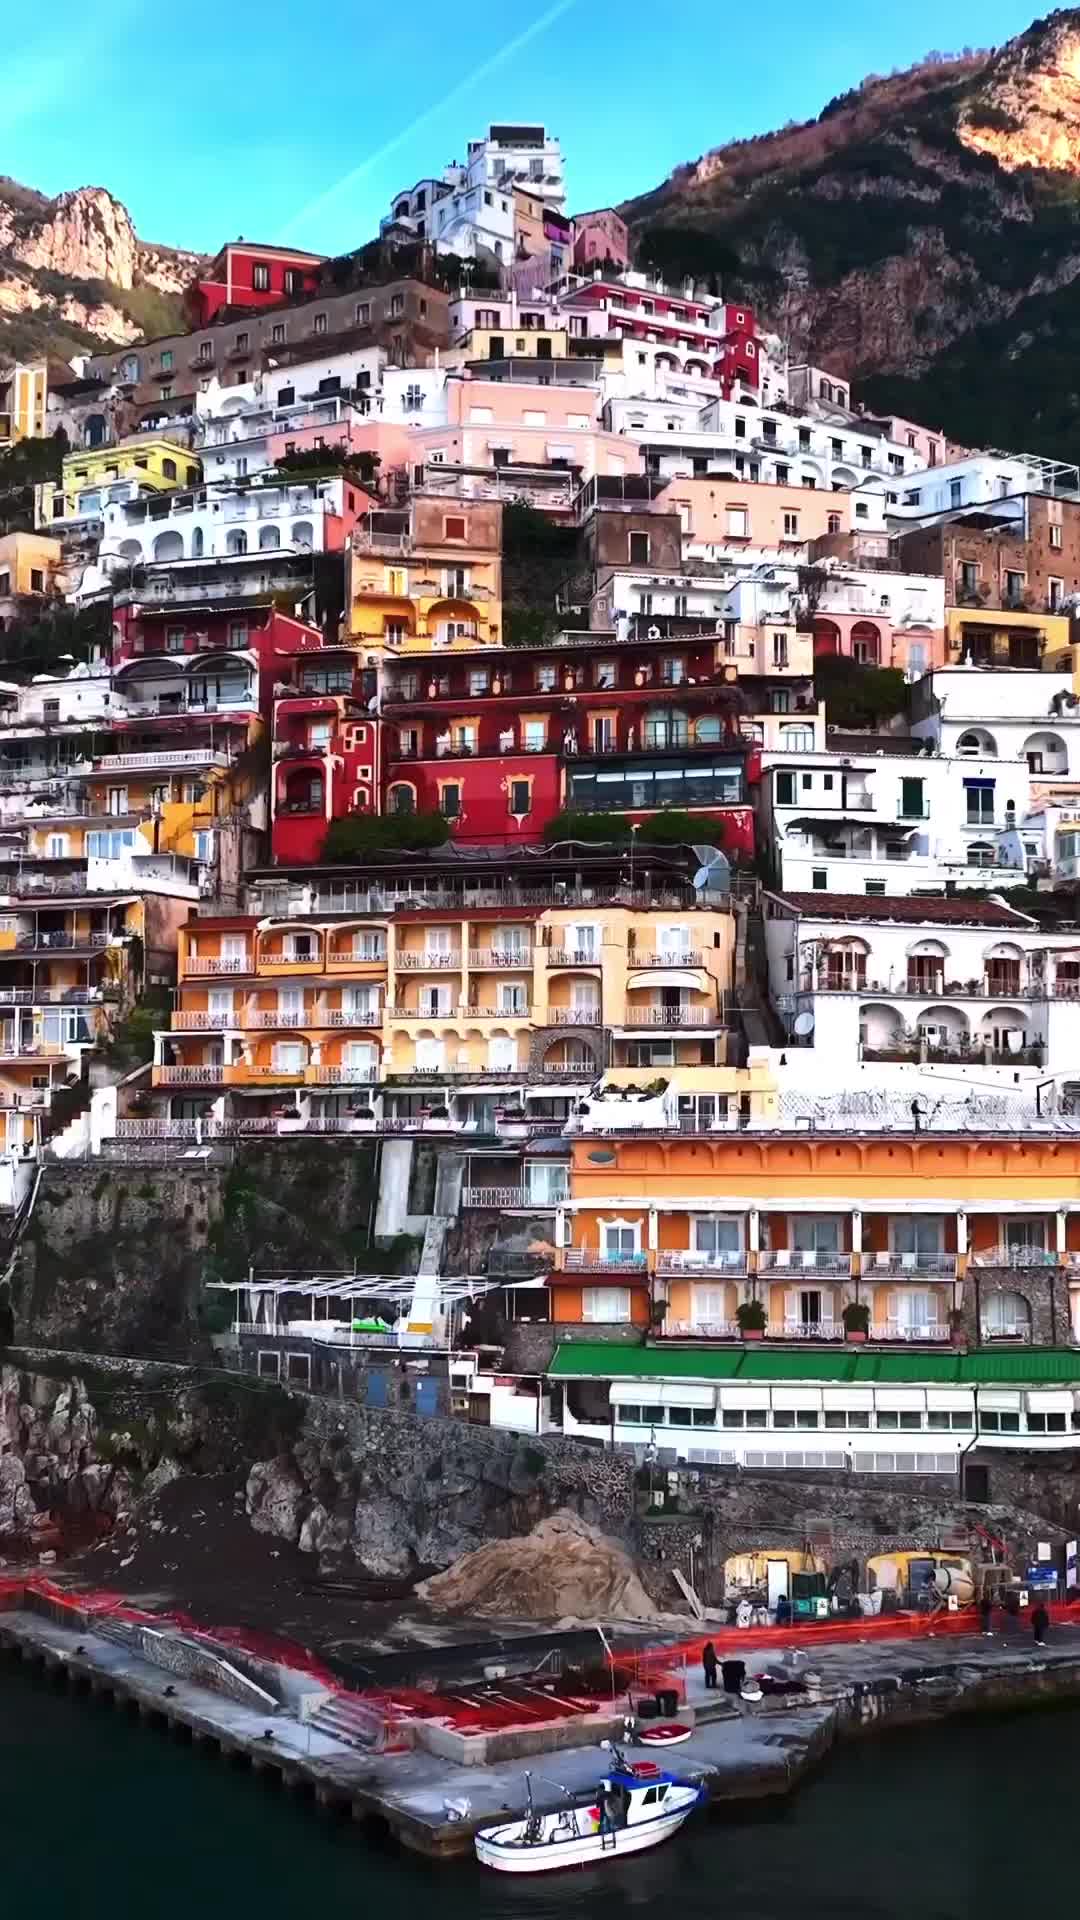 Positano, Italy. What a dream
.
.
.
#italy #amalficoast #positano #europe #reelsinstagram #reeloftheday #viral #fromwhereidrone #djiglobal